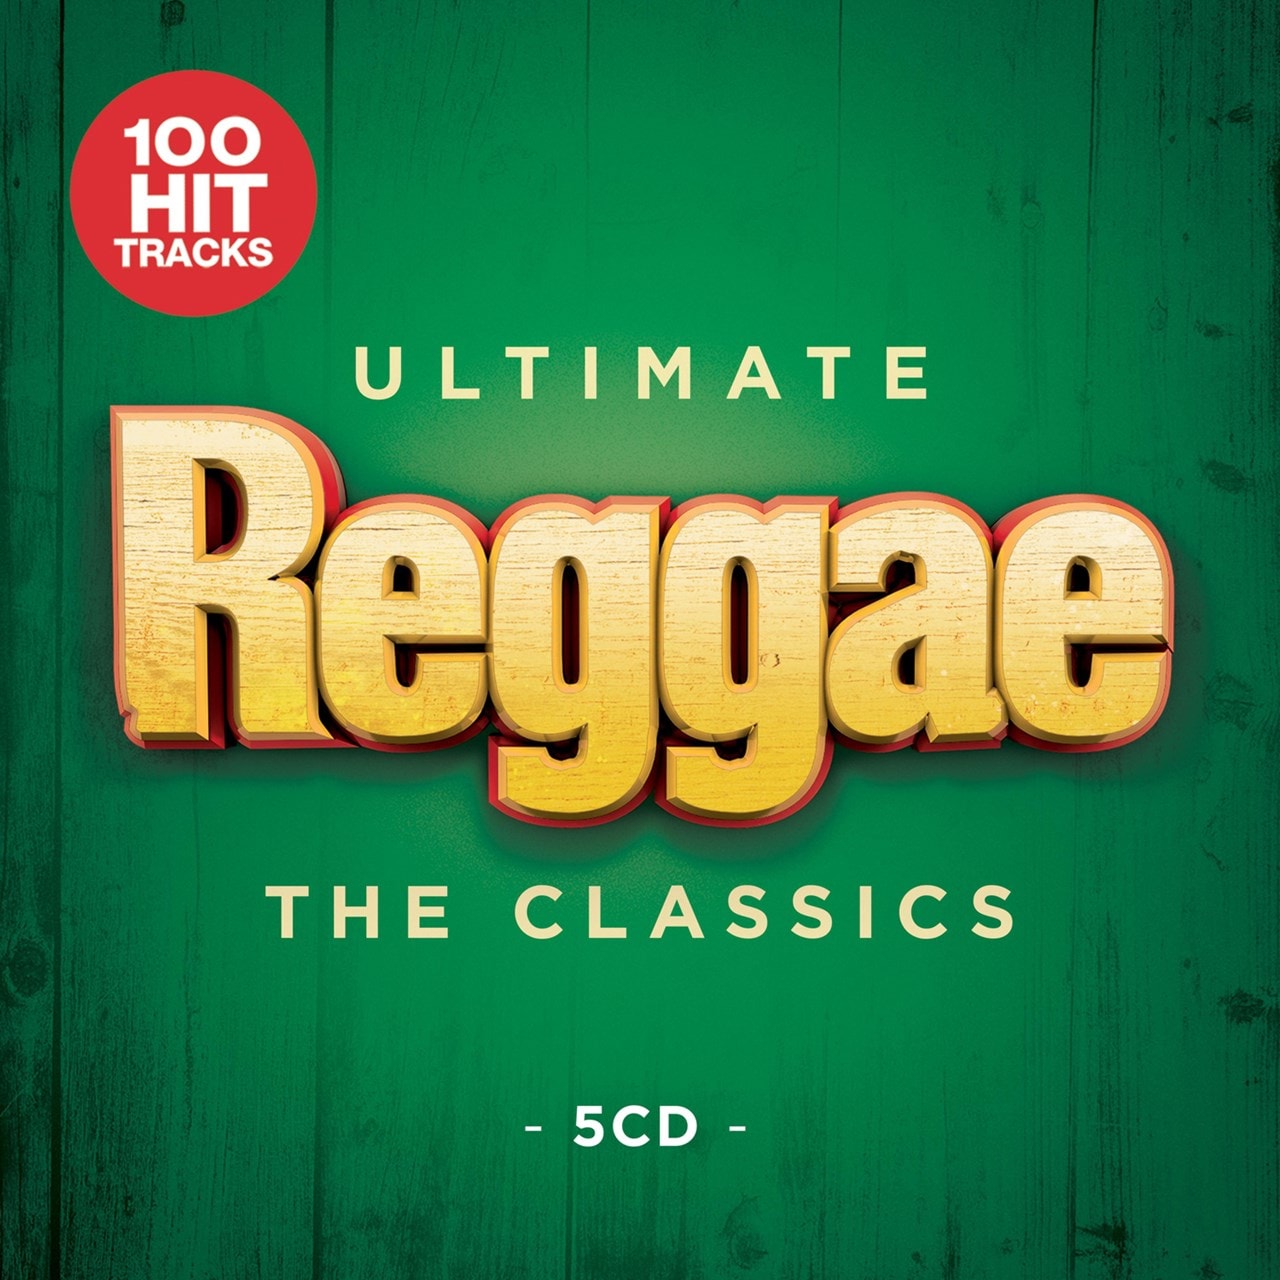 Ultimate Reggae The Classics Cd Box Set Free Shipping Over £20 Hmv Store